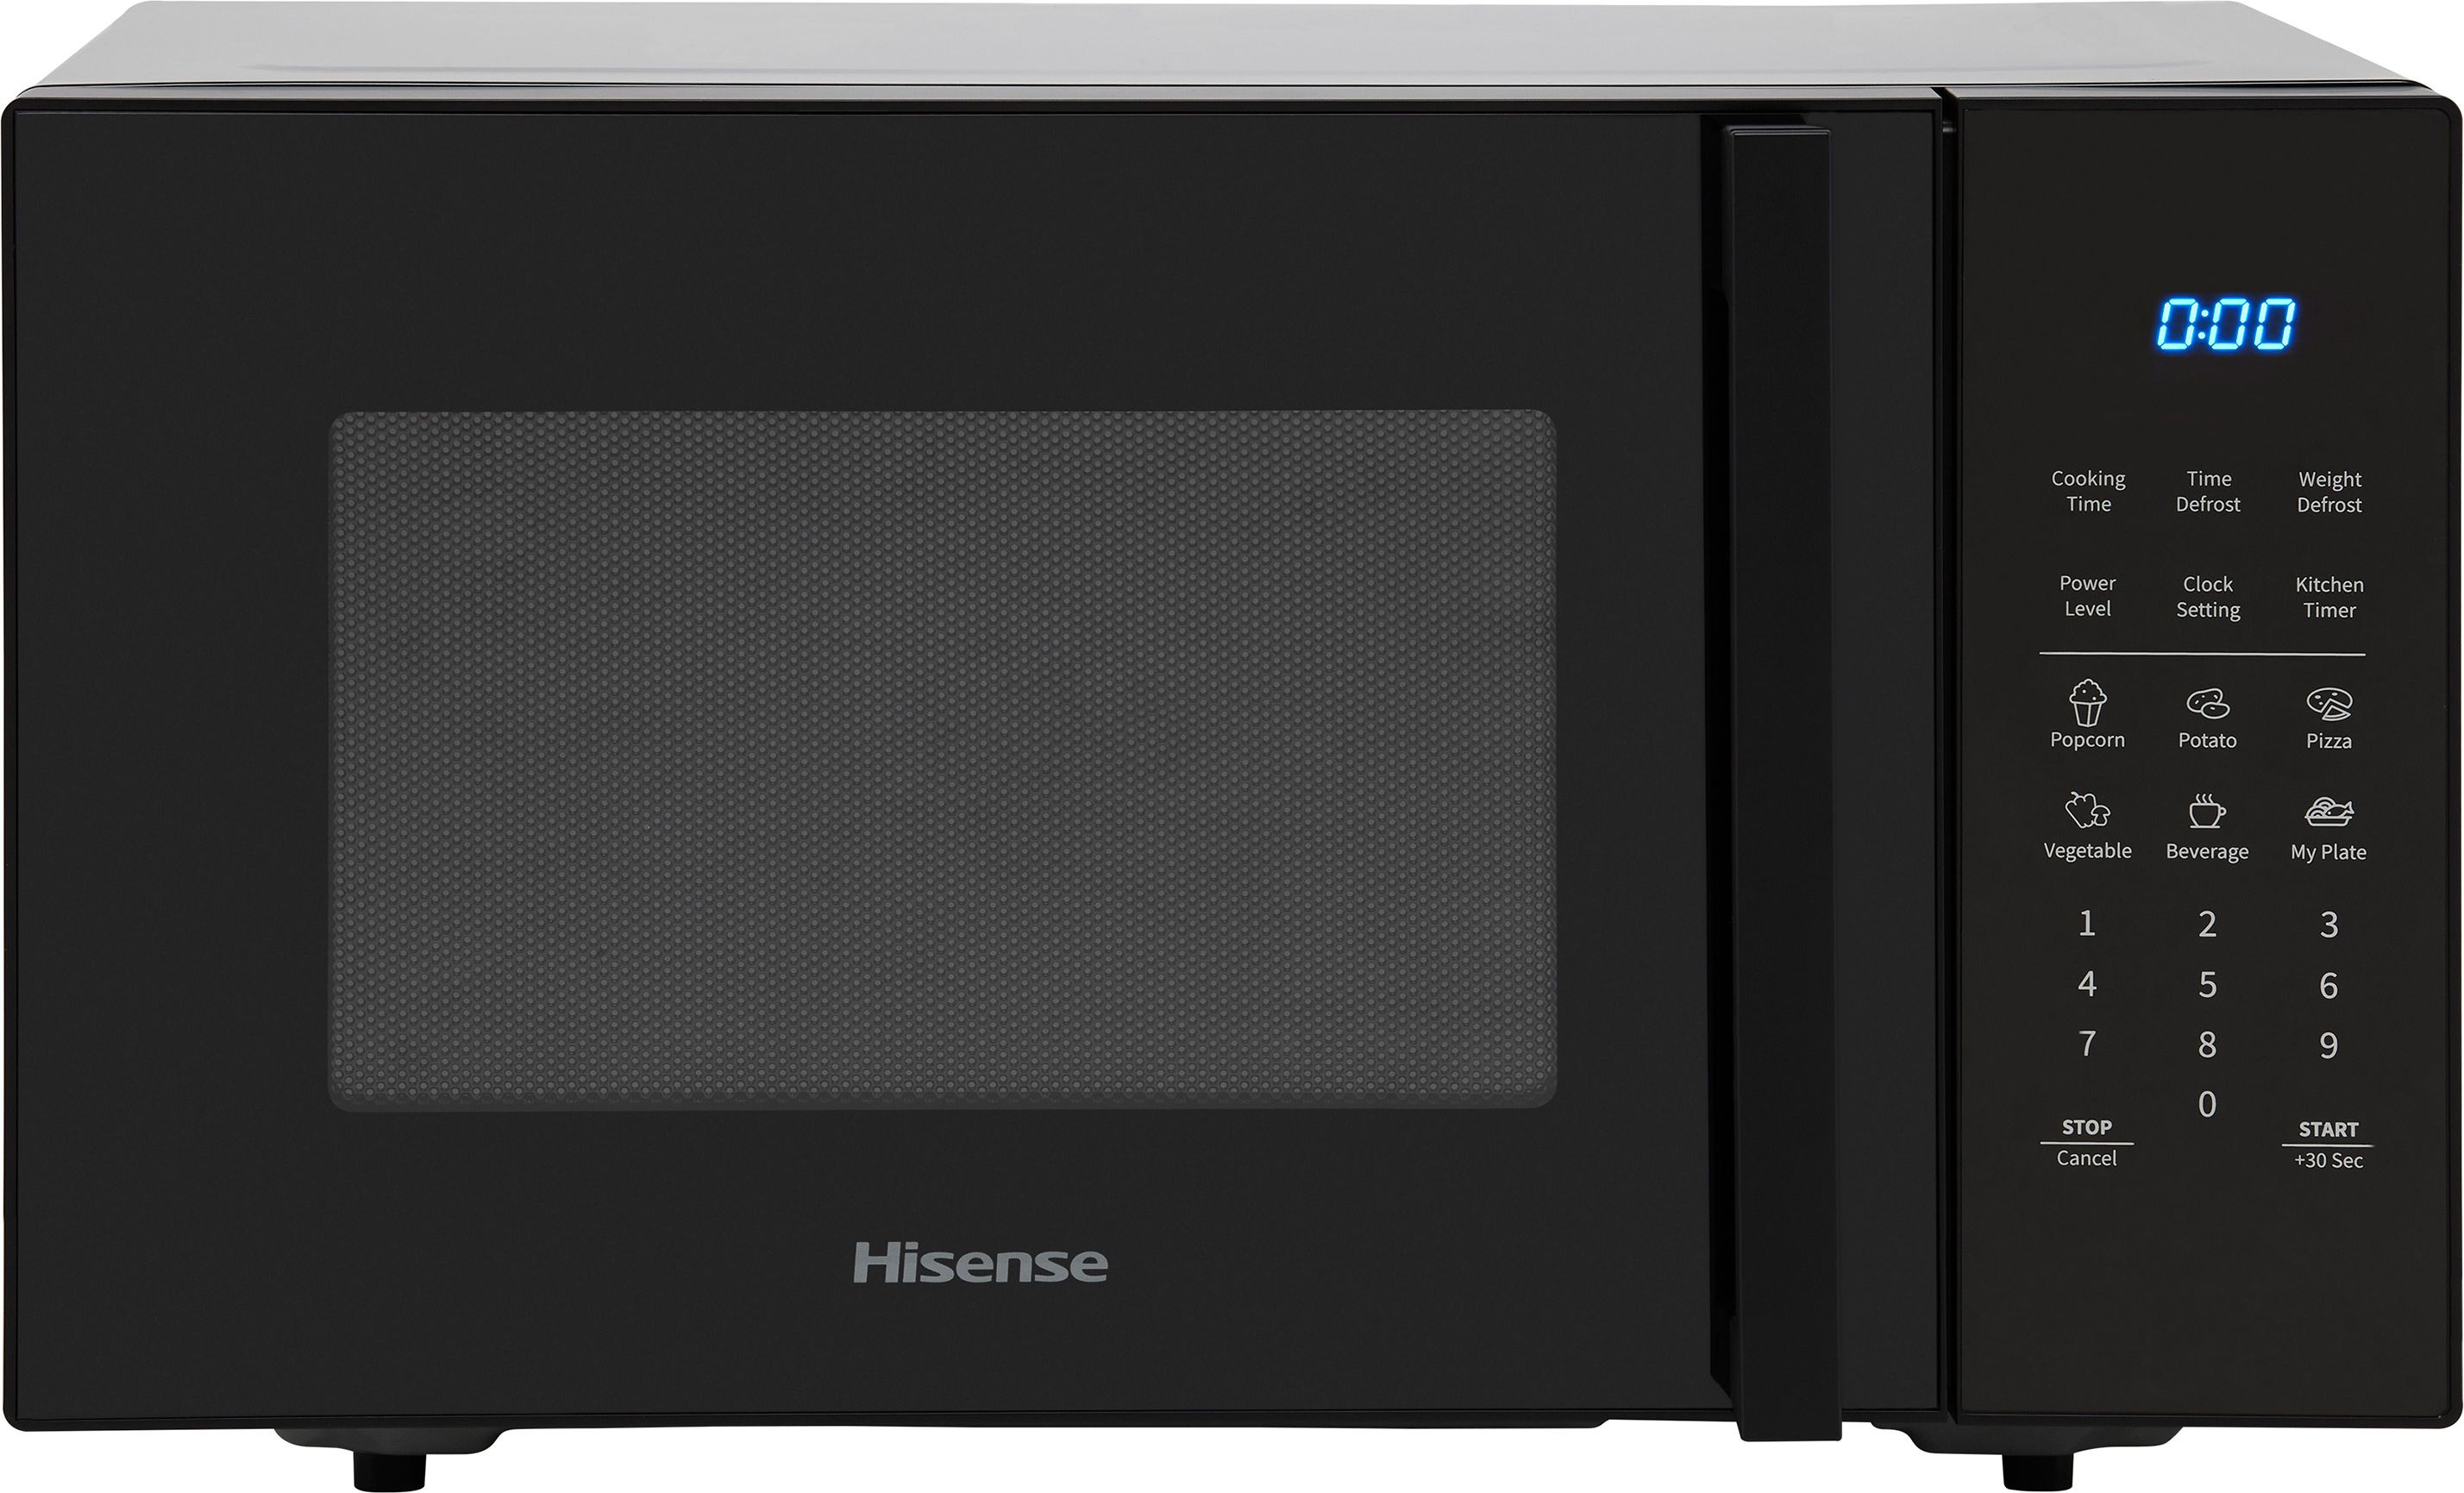 Hisense H25MOBS7HUK 29cm tall, 48cm wide, Freestanding Compact Microwave - Black, Black